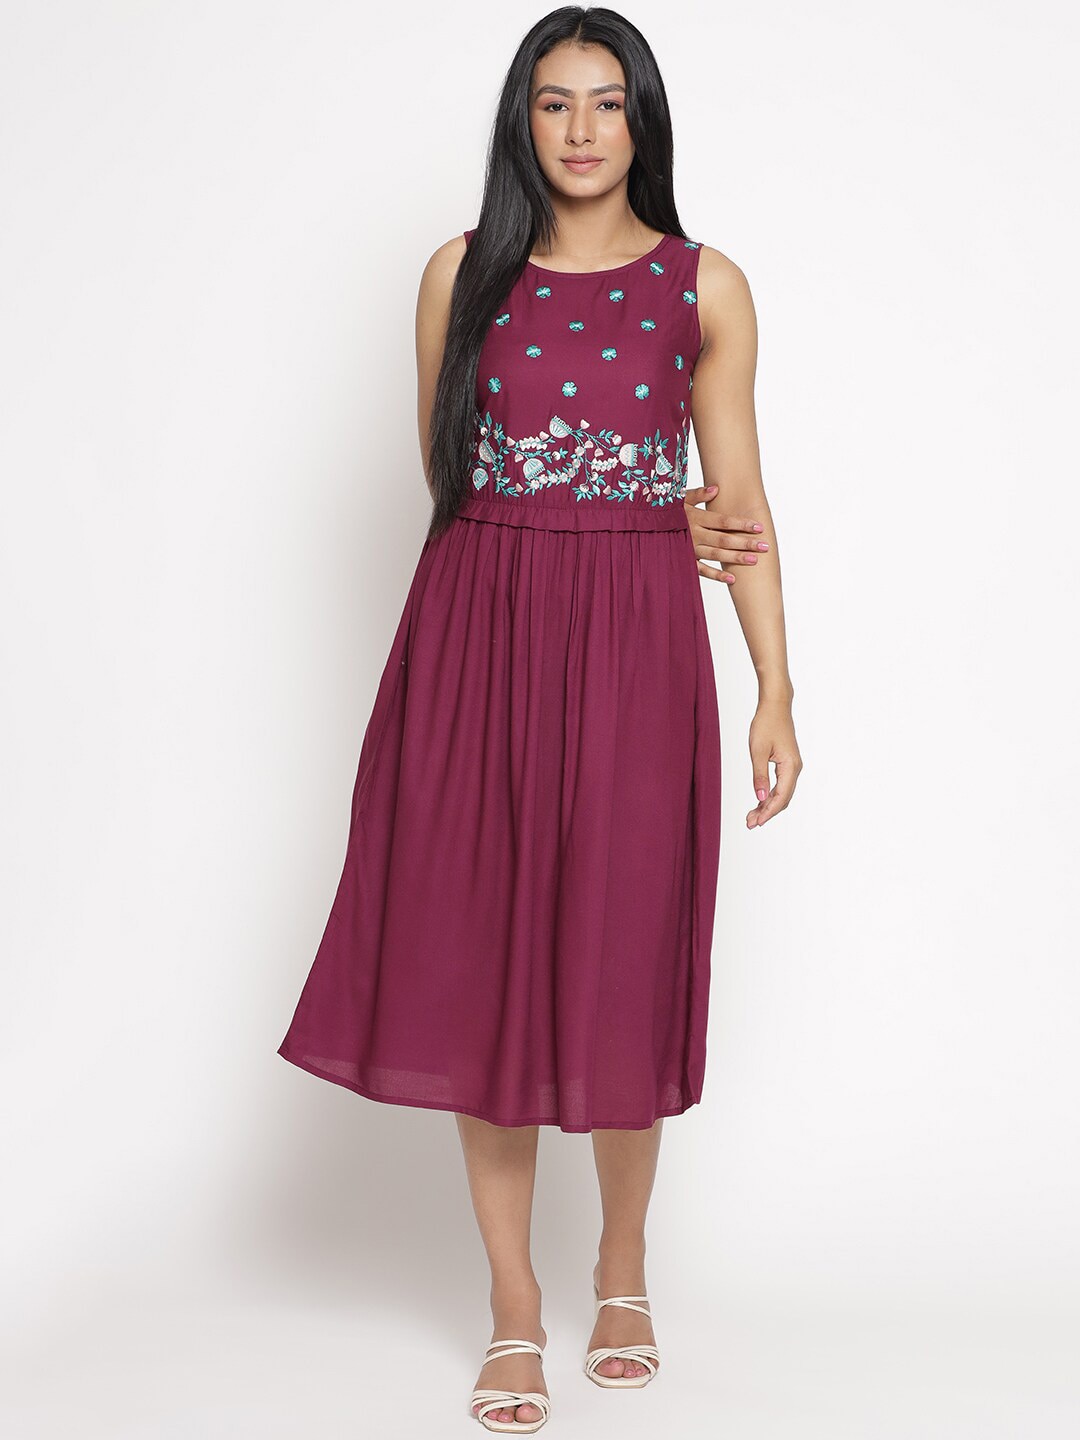 AURELIA Purple Floral Embroidered Ethnic Midi Dress Price in India